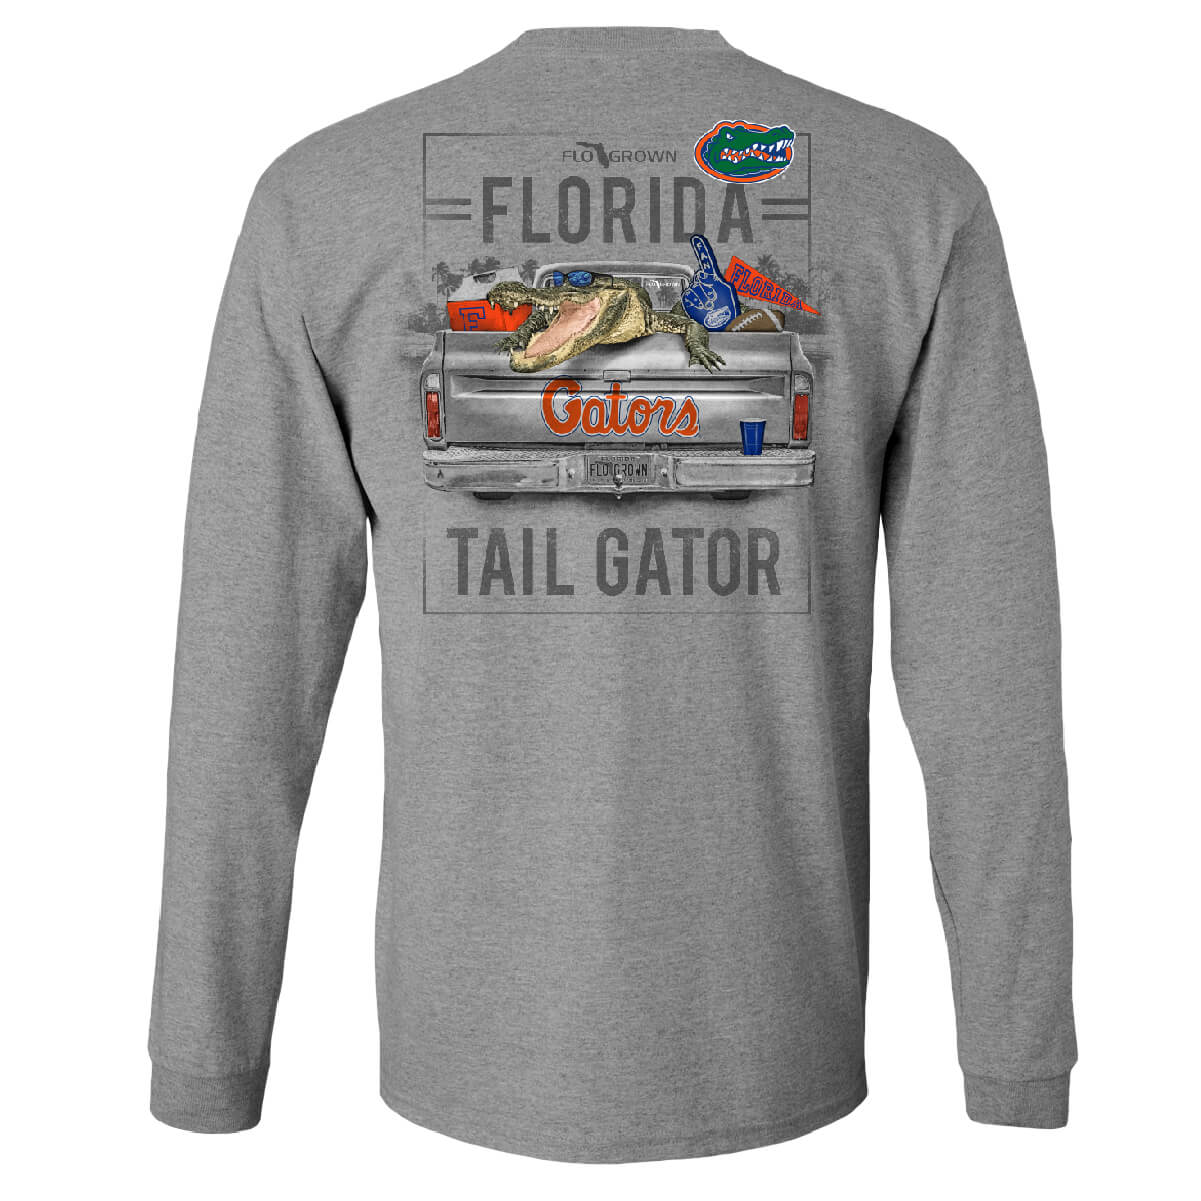 Florida Gators Tail Gator Long Sleeve Tee - Back